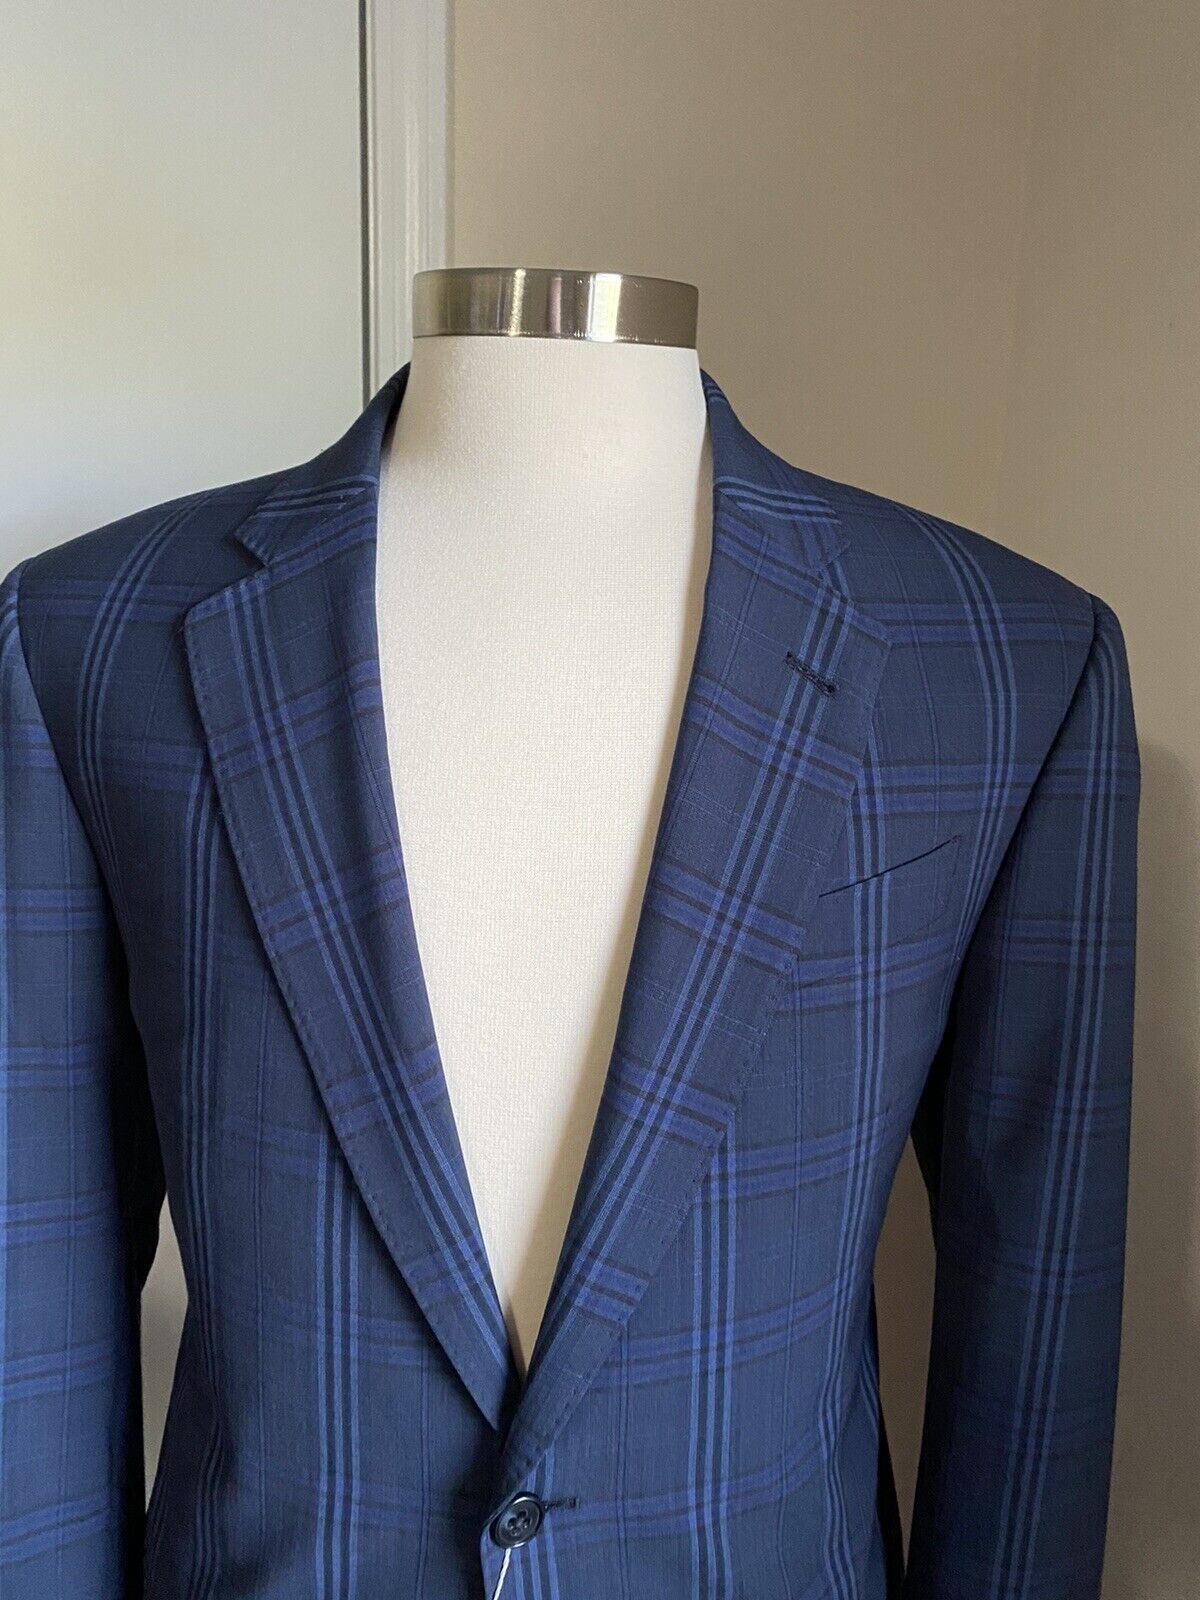 NWT $1495 Armani Collezioni Мужской спортивный пиджак Синий 42R US/52R EU